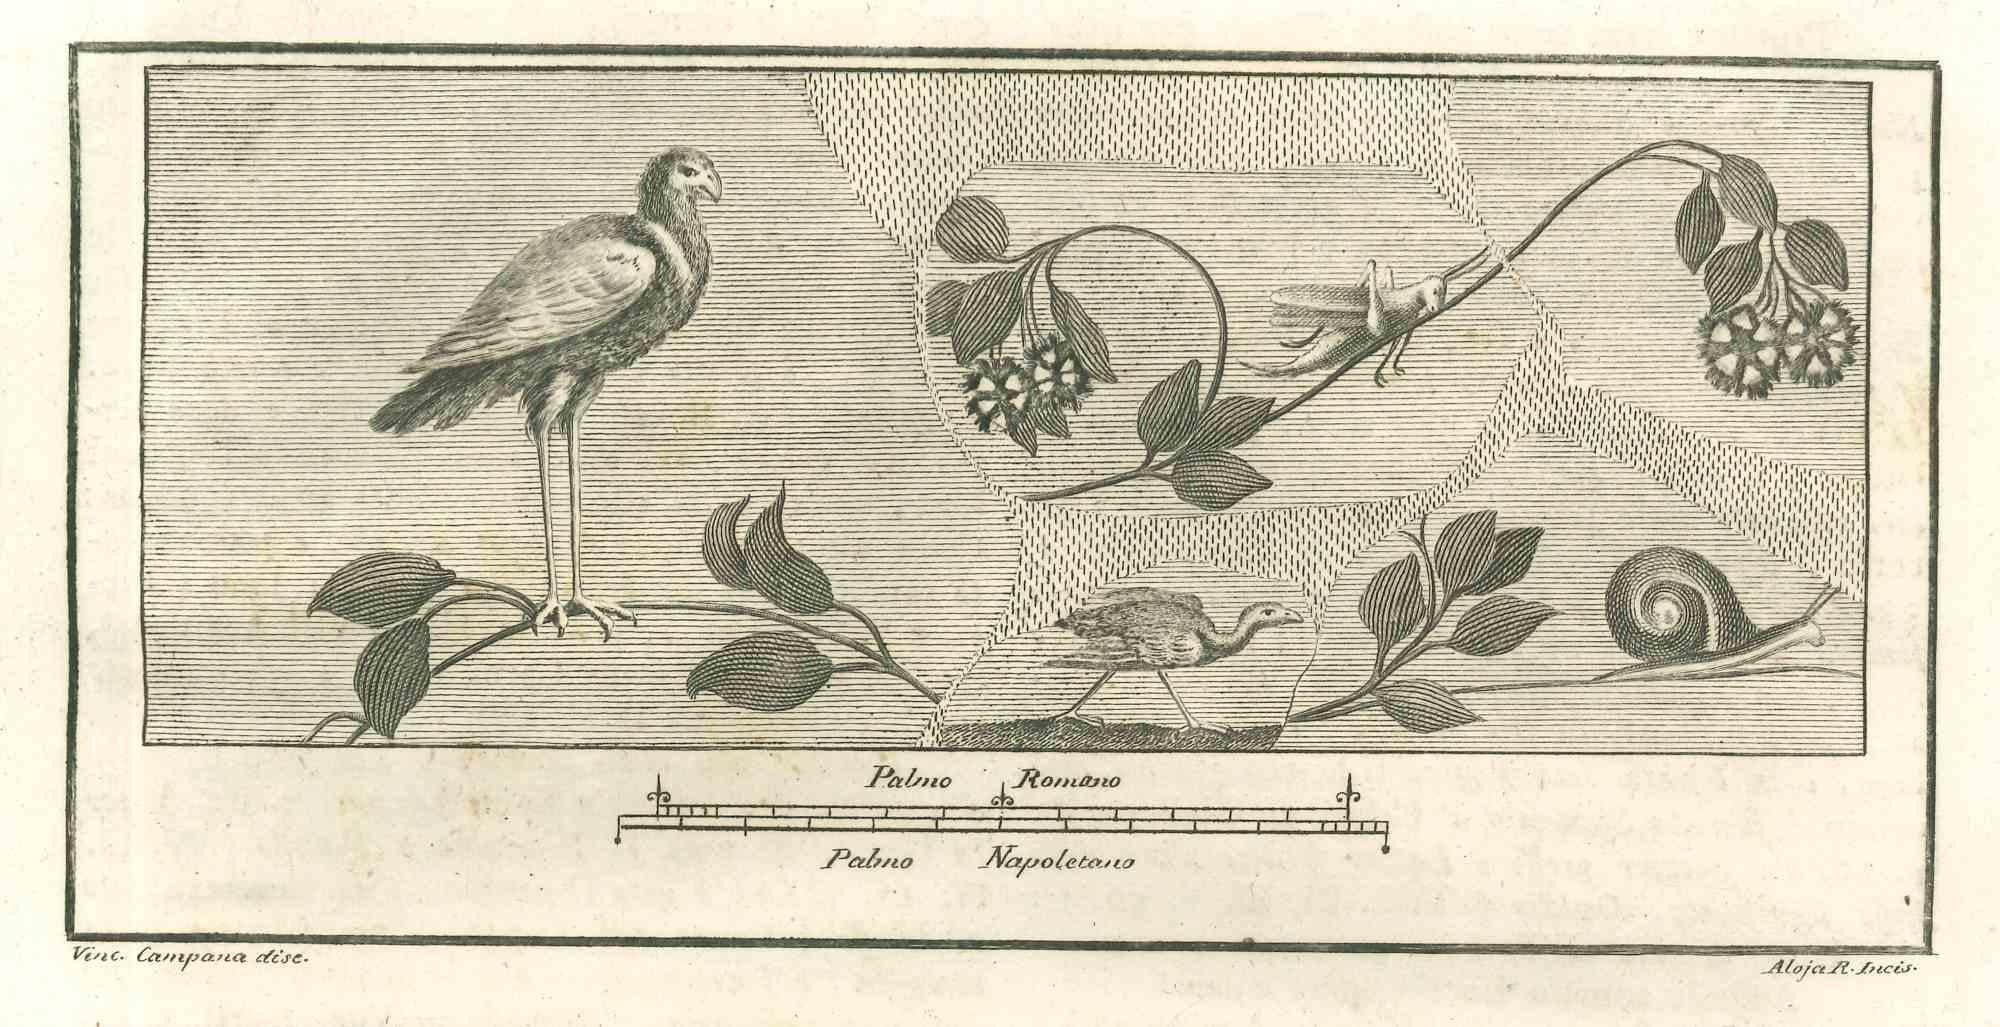 Gravure oiseau Fresco de Giuseppe Aloja - 18ème siècle